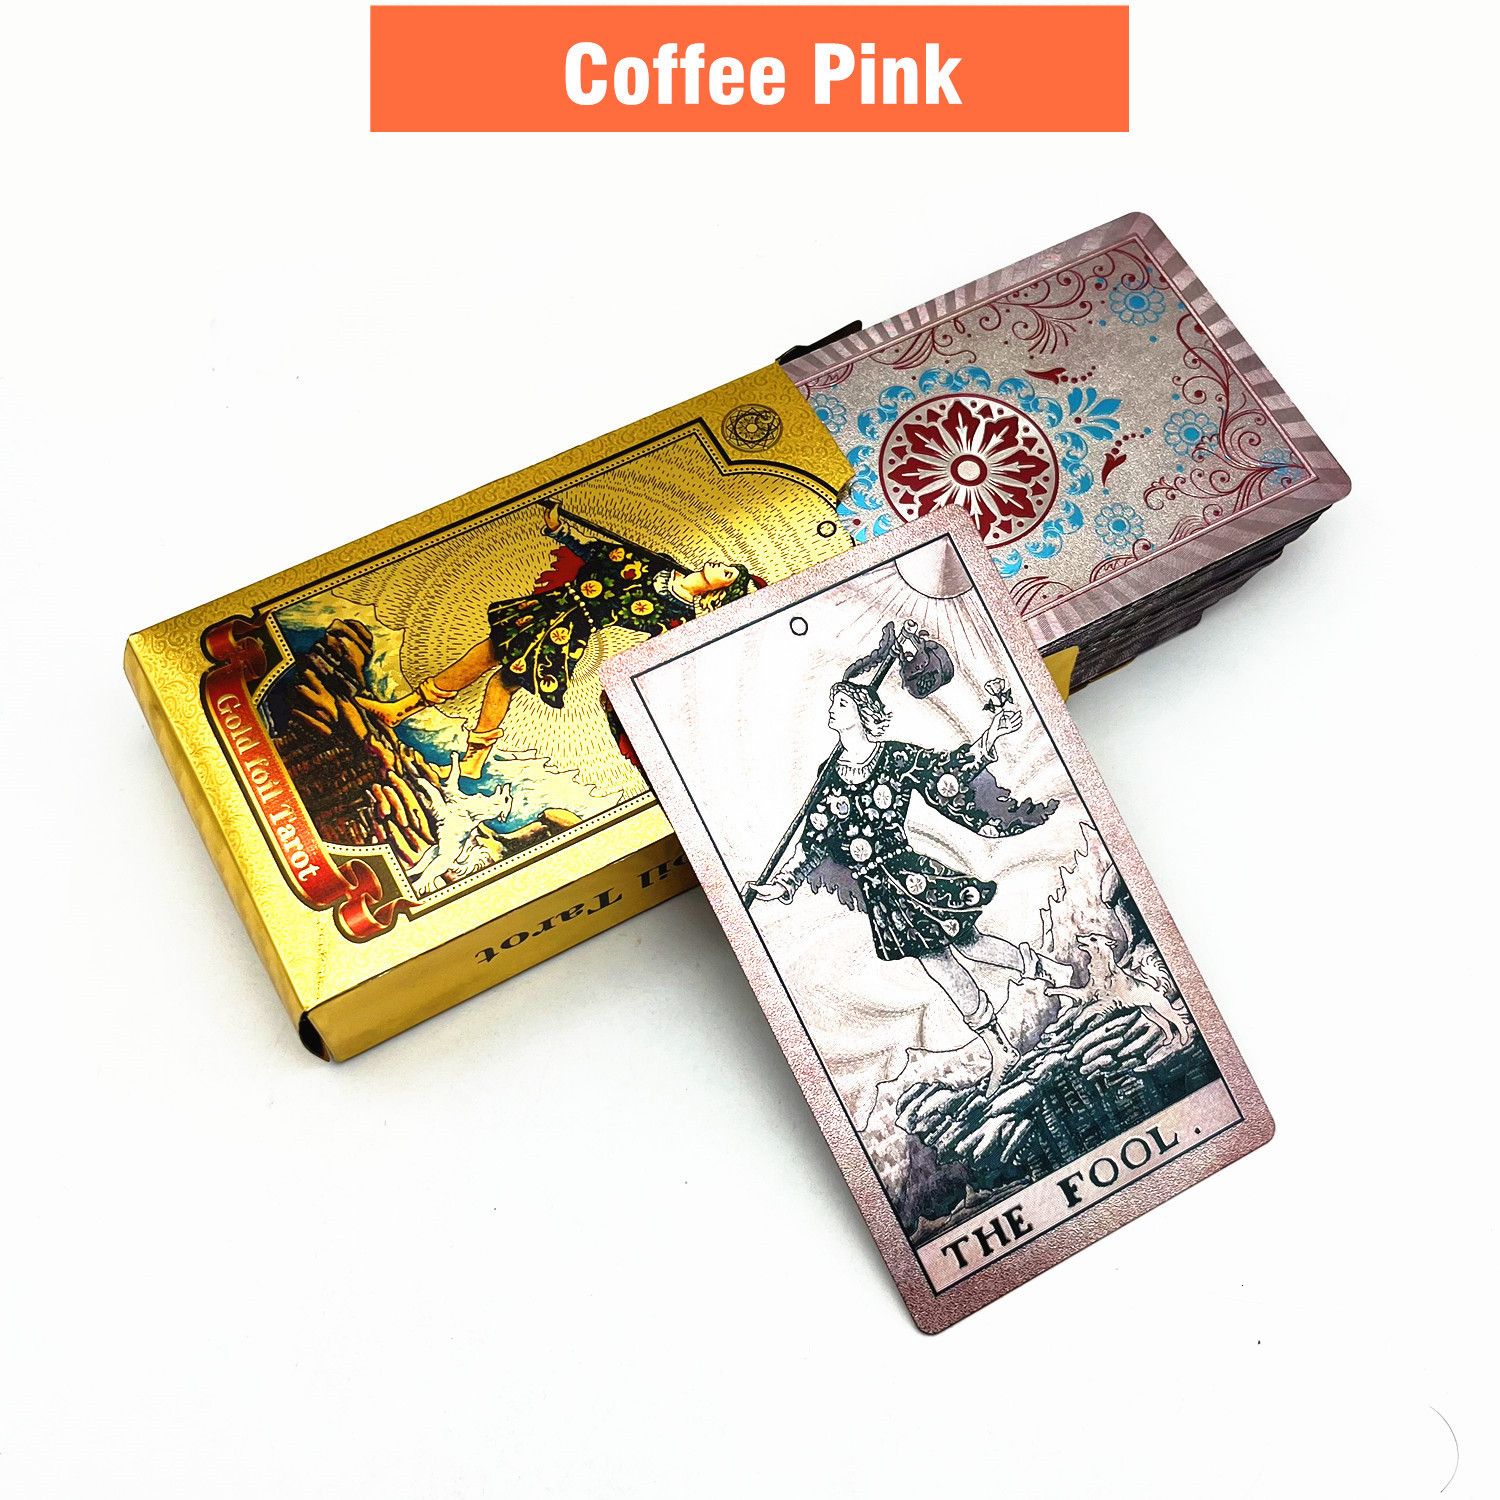 Coffee-pink-1 Deck